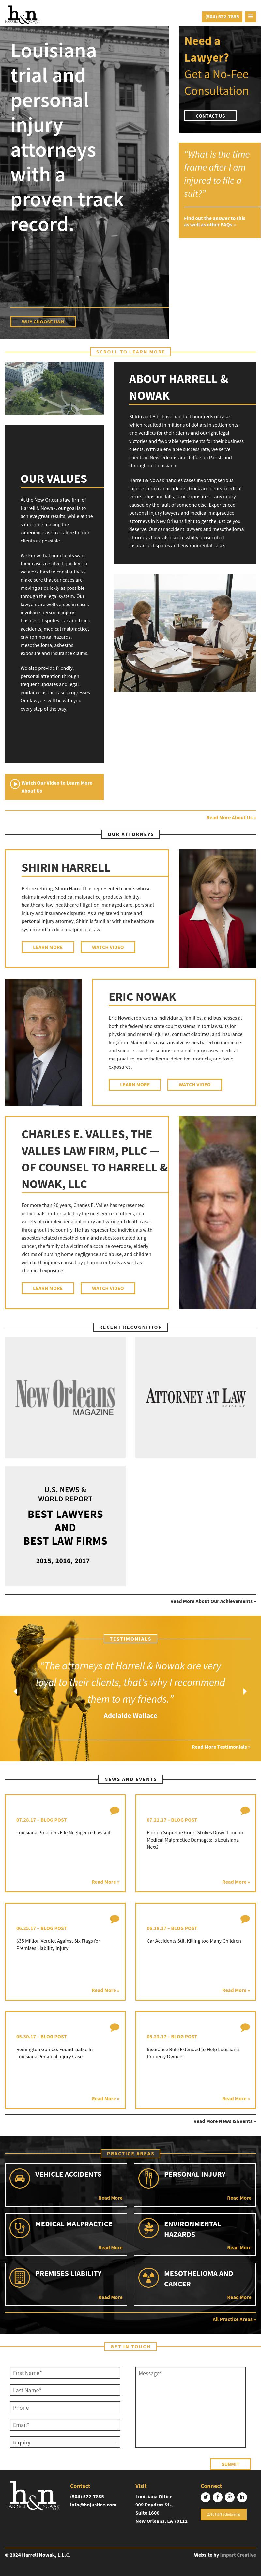 Harrell & Nowak, LLC - New Orleans LA Lawyers